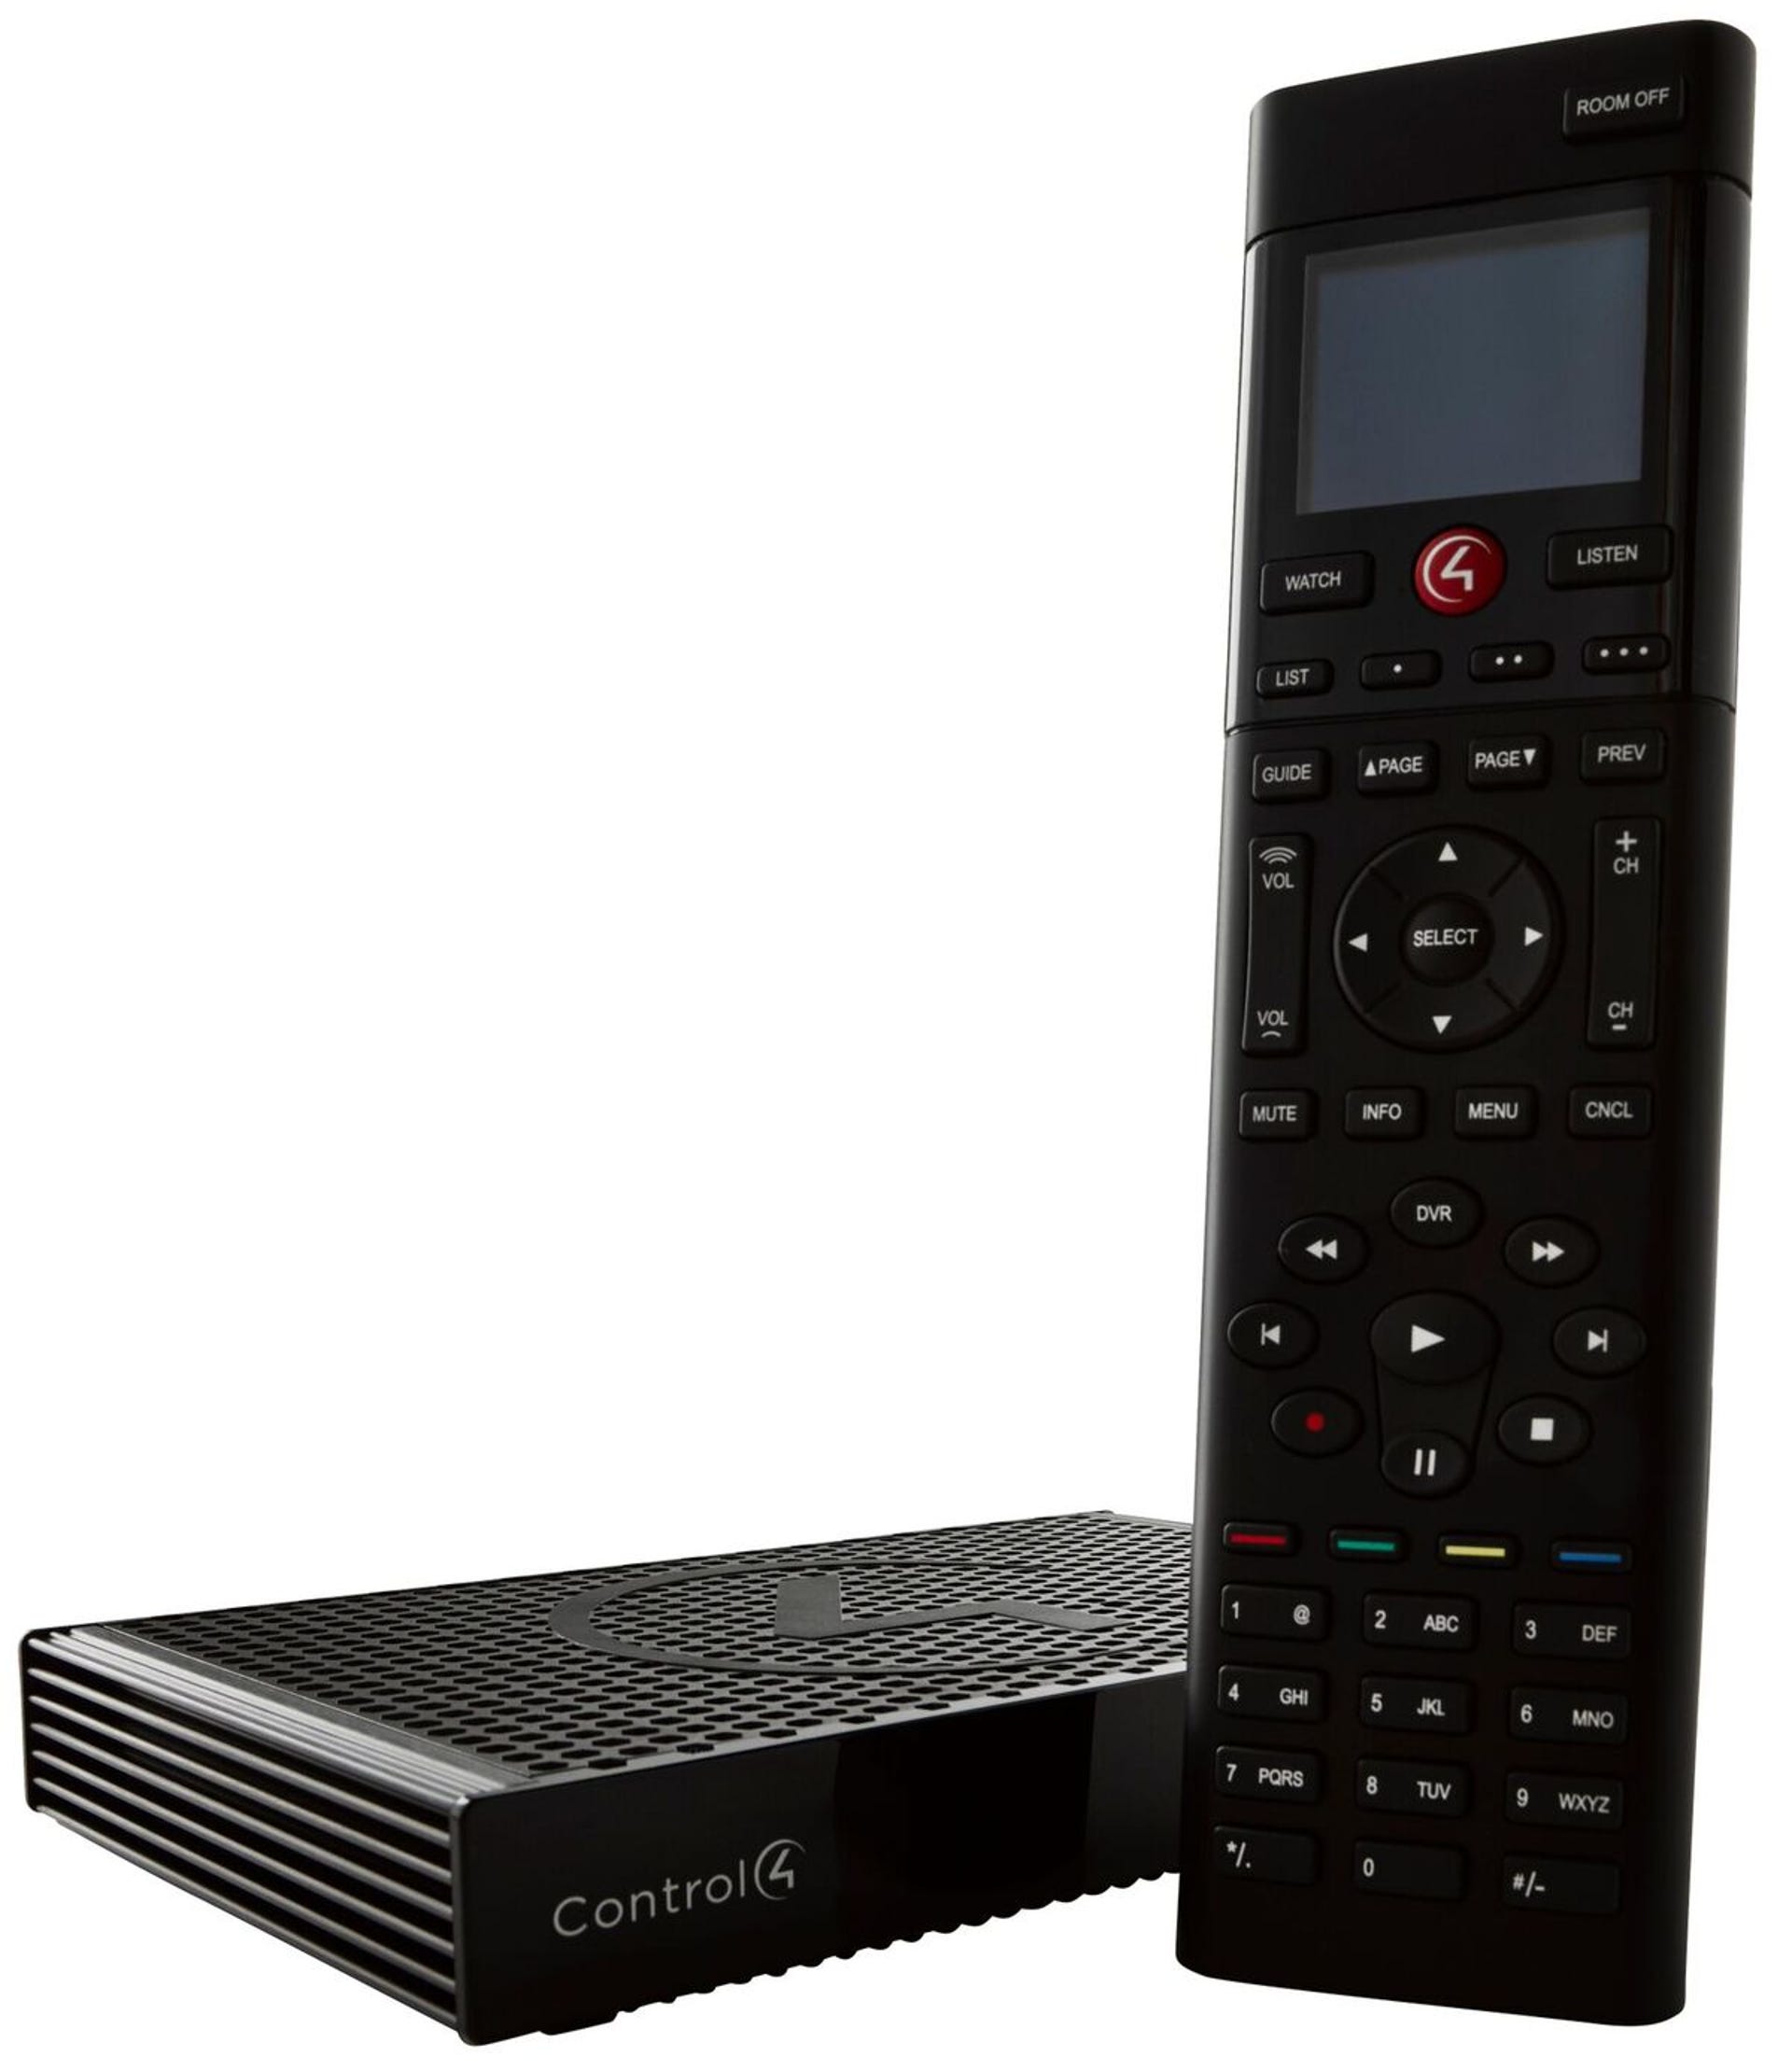 control4-ea-series-box-and-remote.jpg